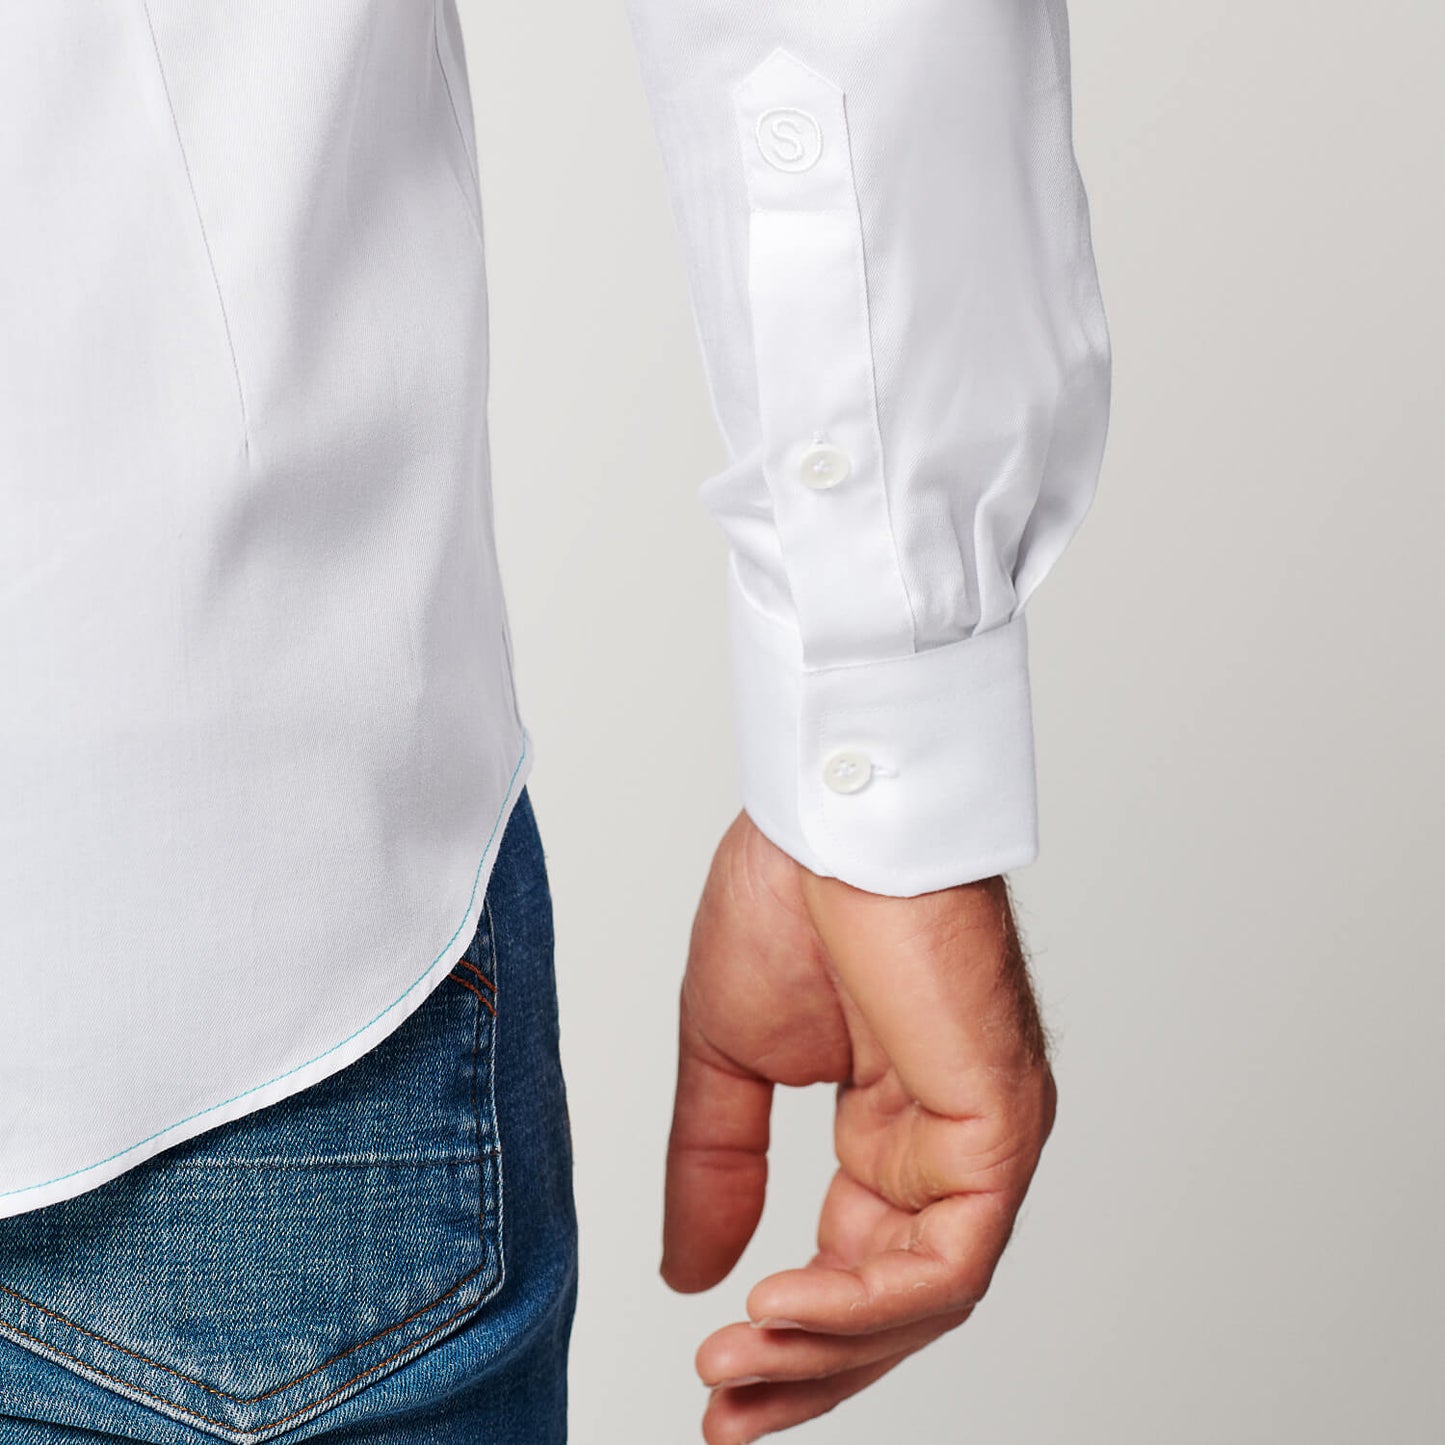 Overhemd - Regular Fit - Circular White